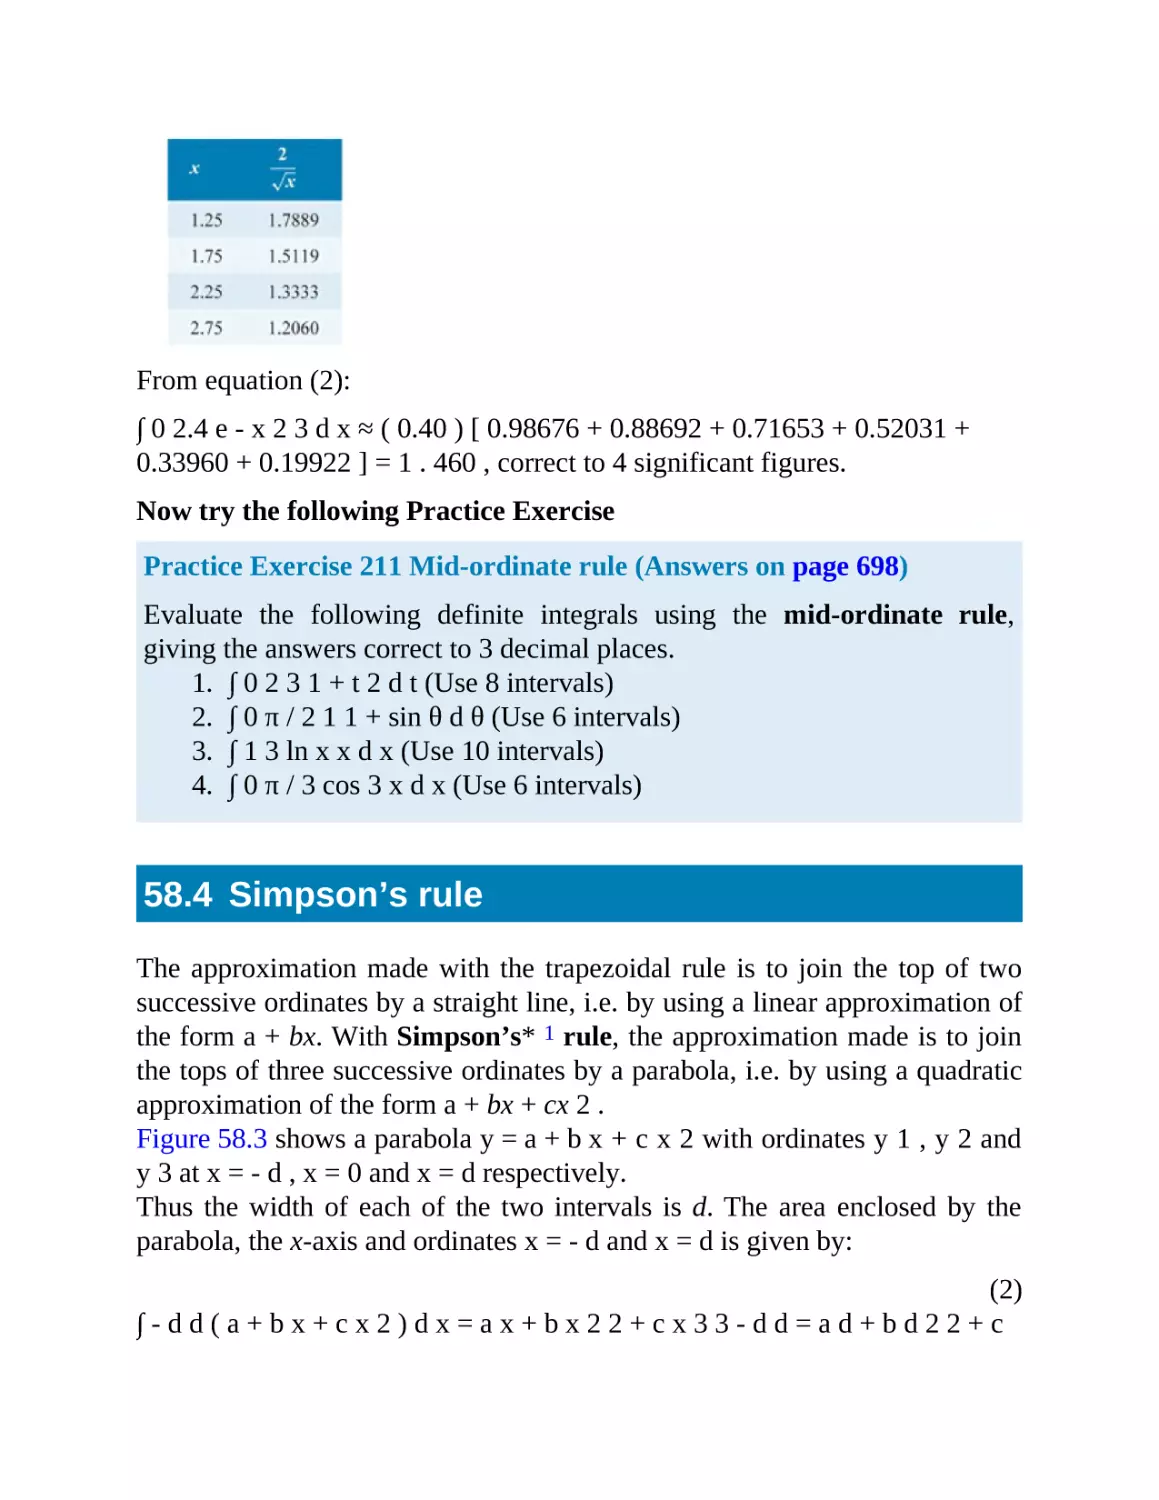 58.4 Simpson’s rule